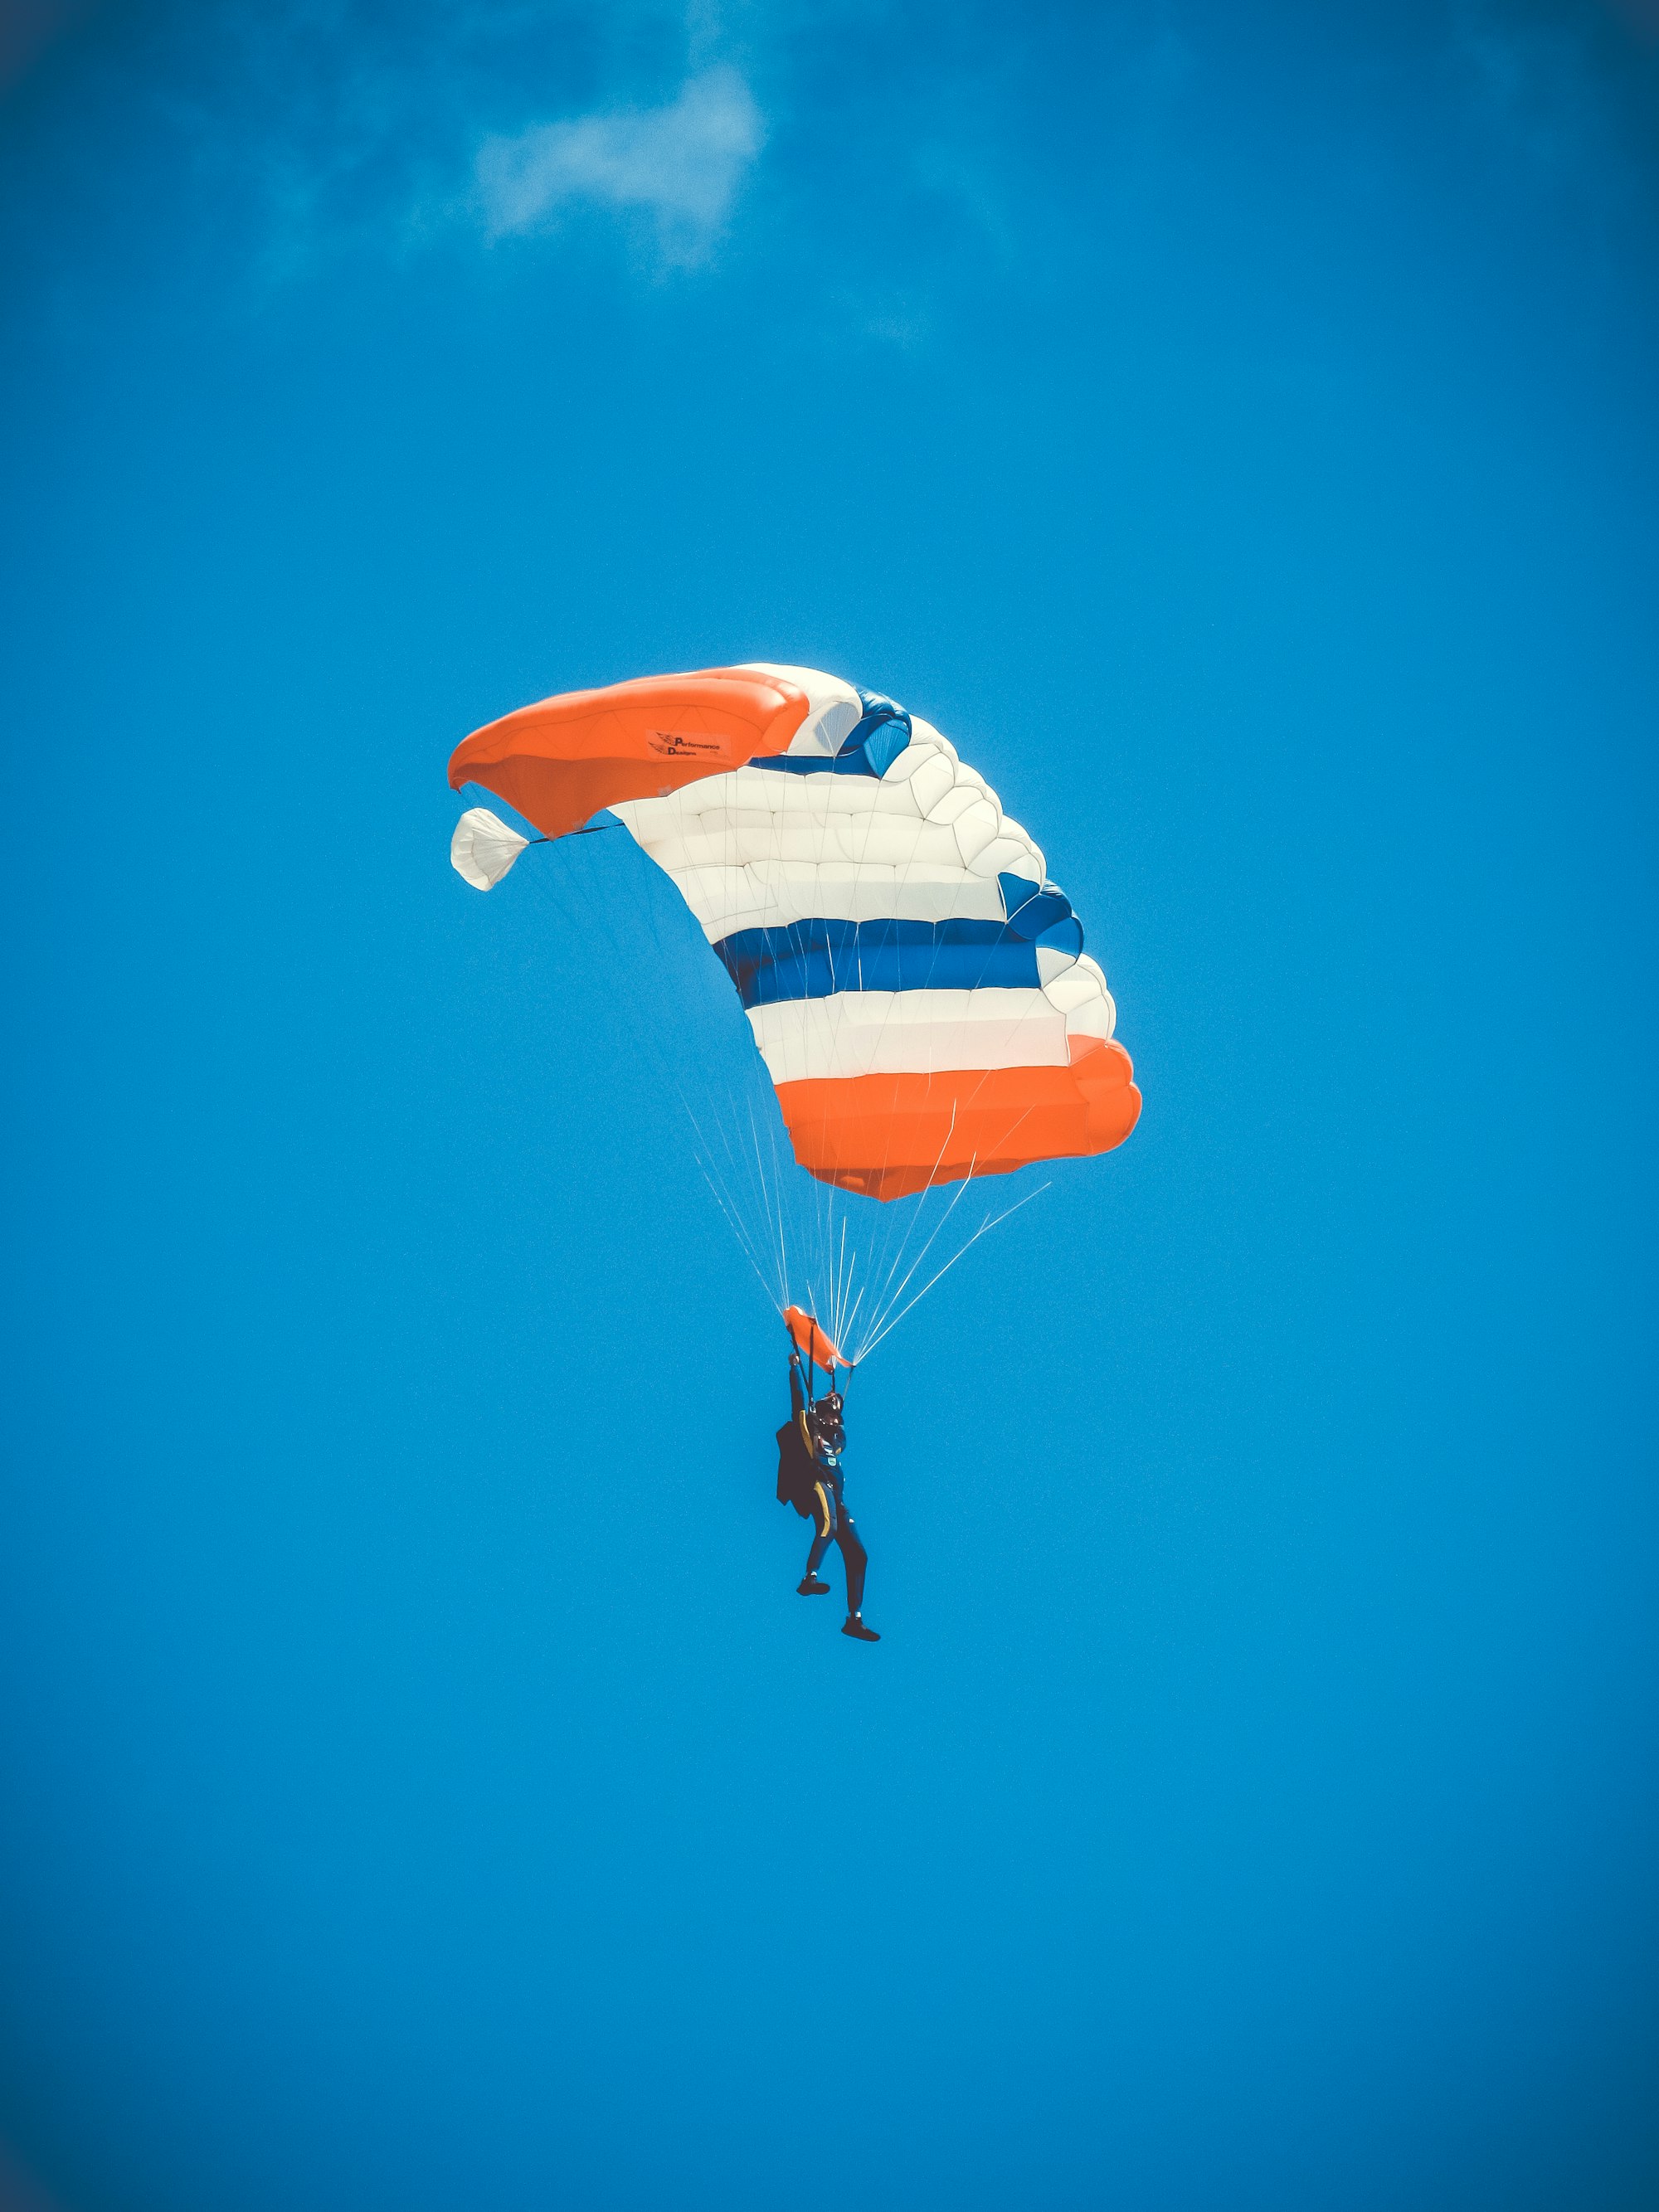 Parachute experience for Mazatlan visitors